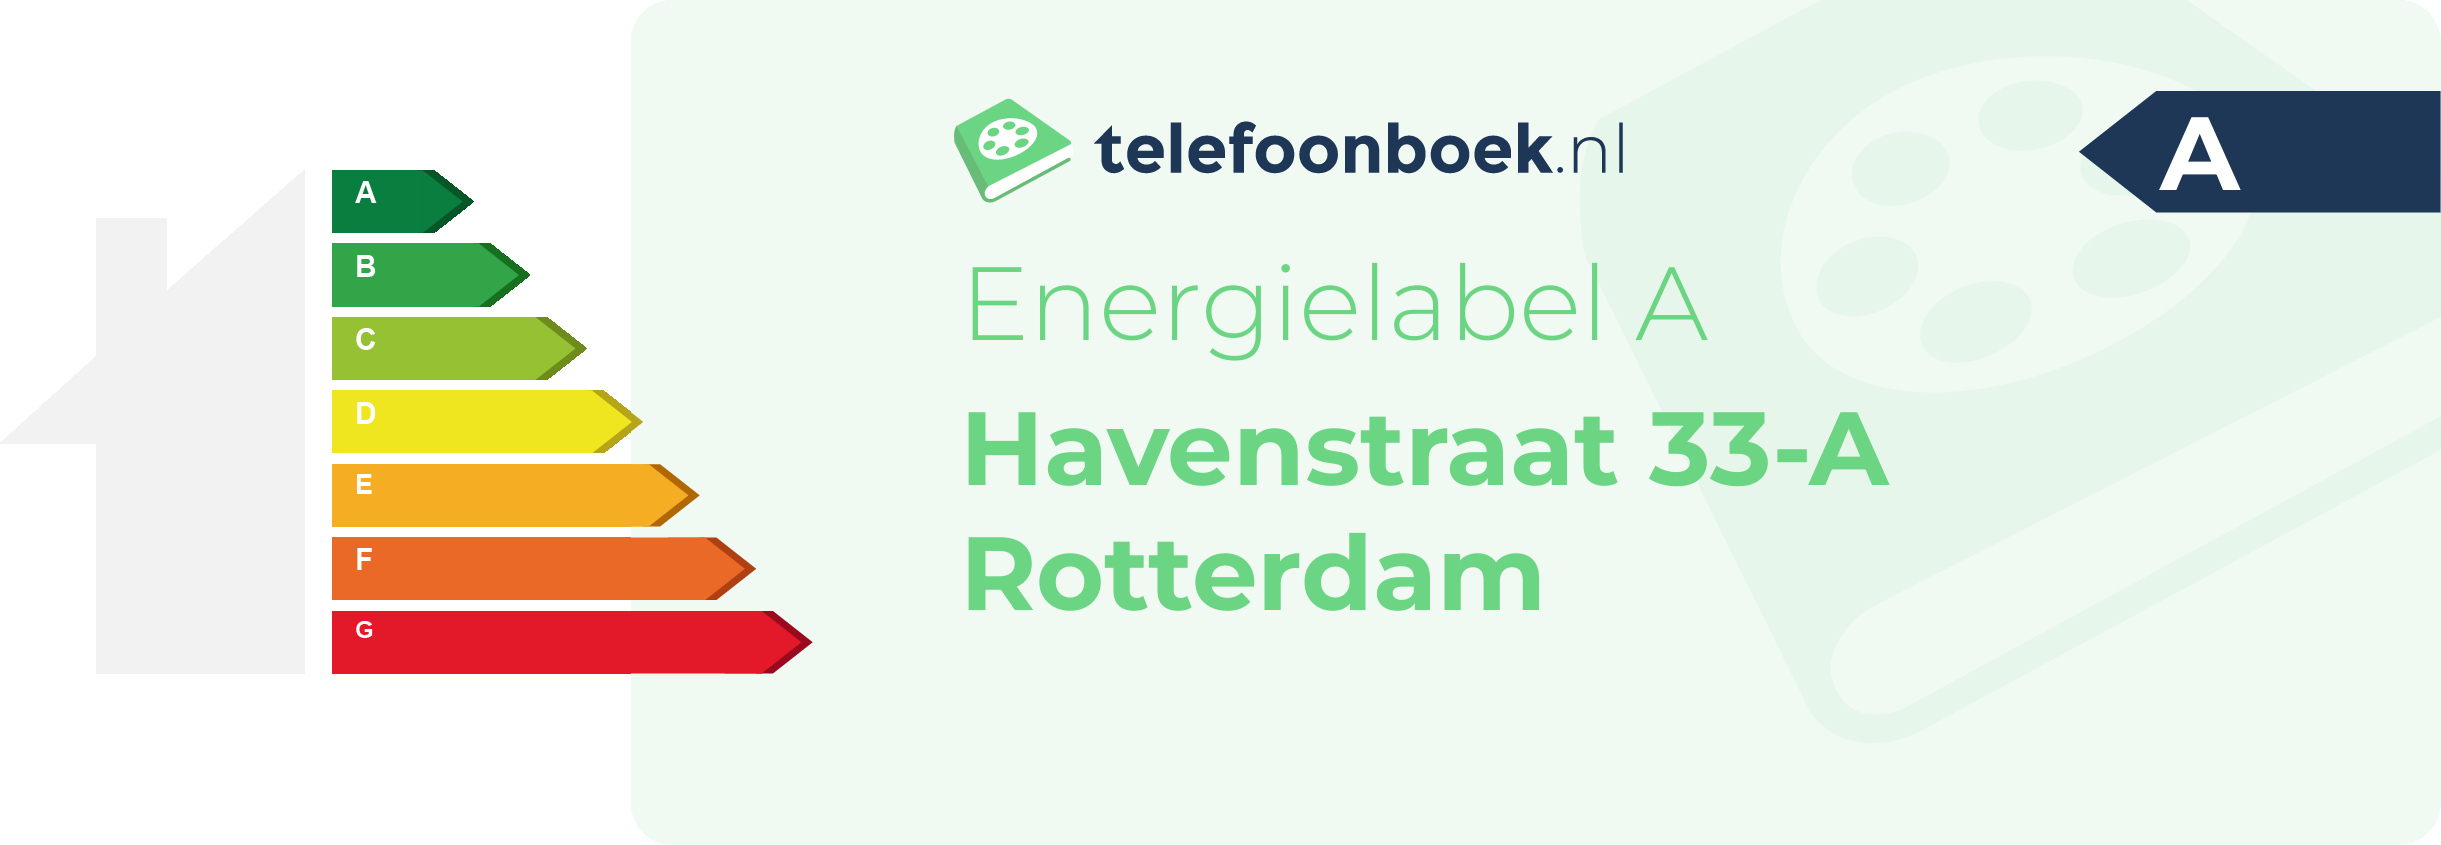 Energielabel Havenstraat 33-A Rotterdam